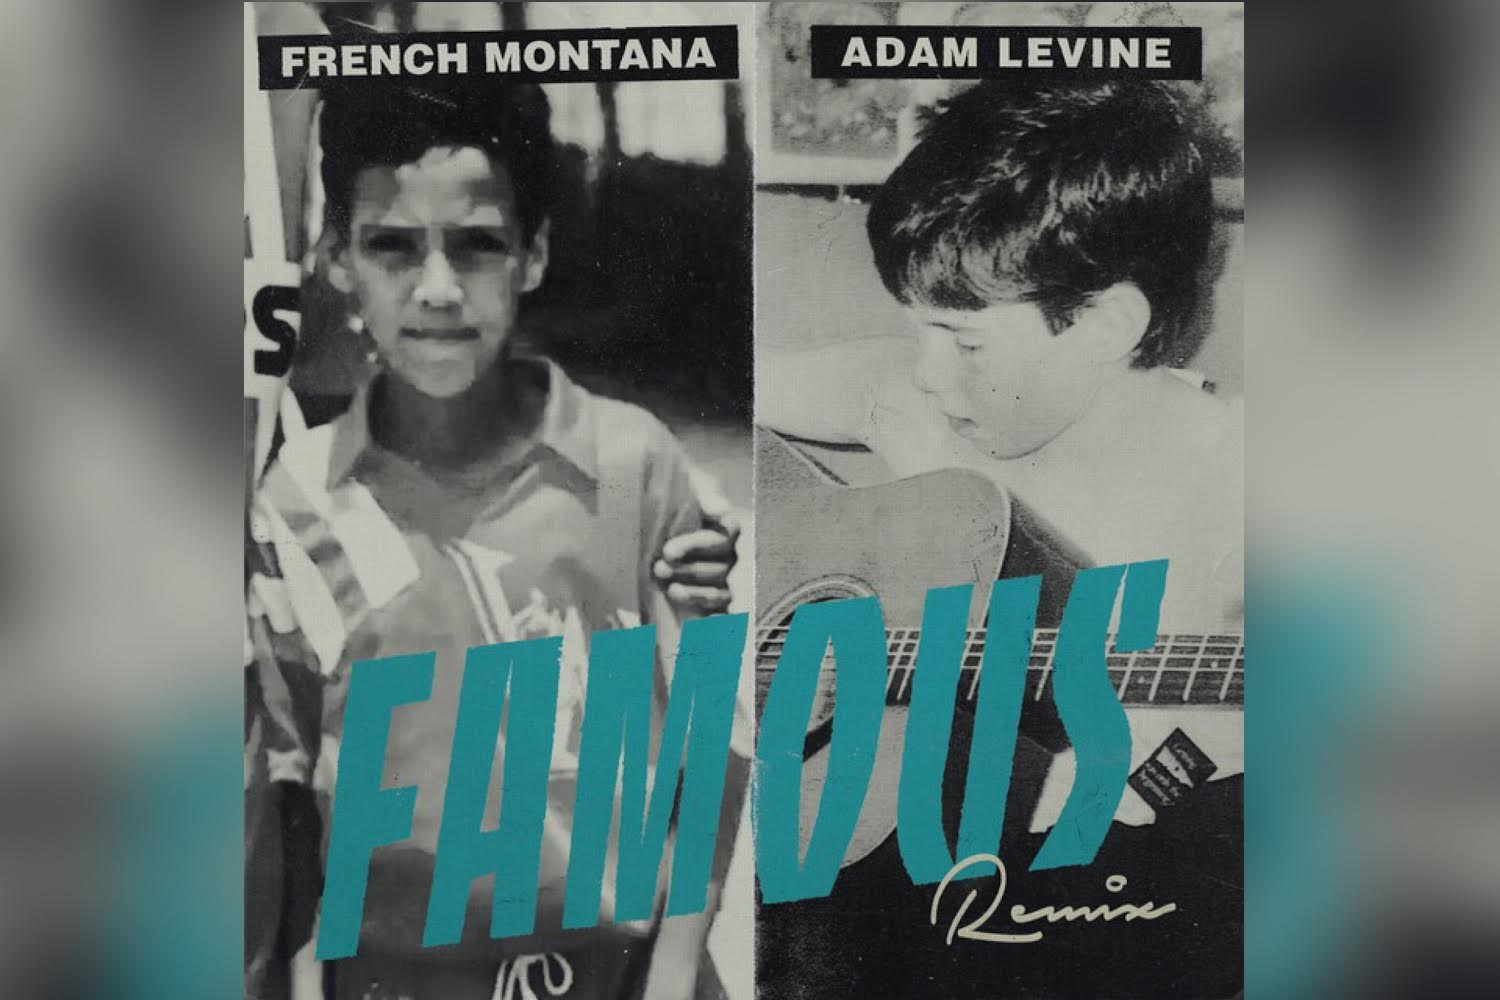 French Montana Feat. Adam Levine - Famous [Remix]